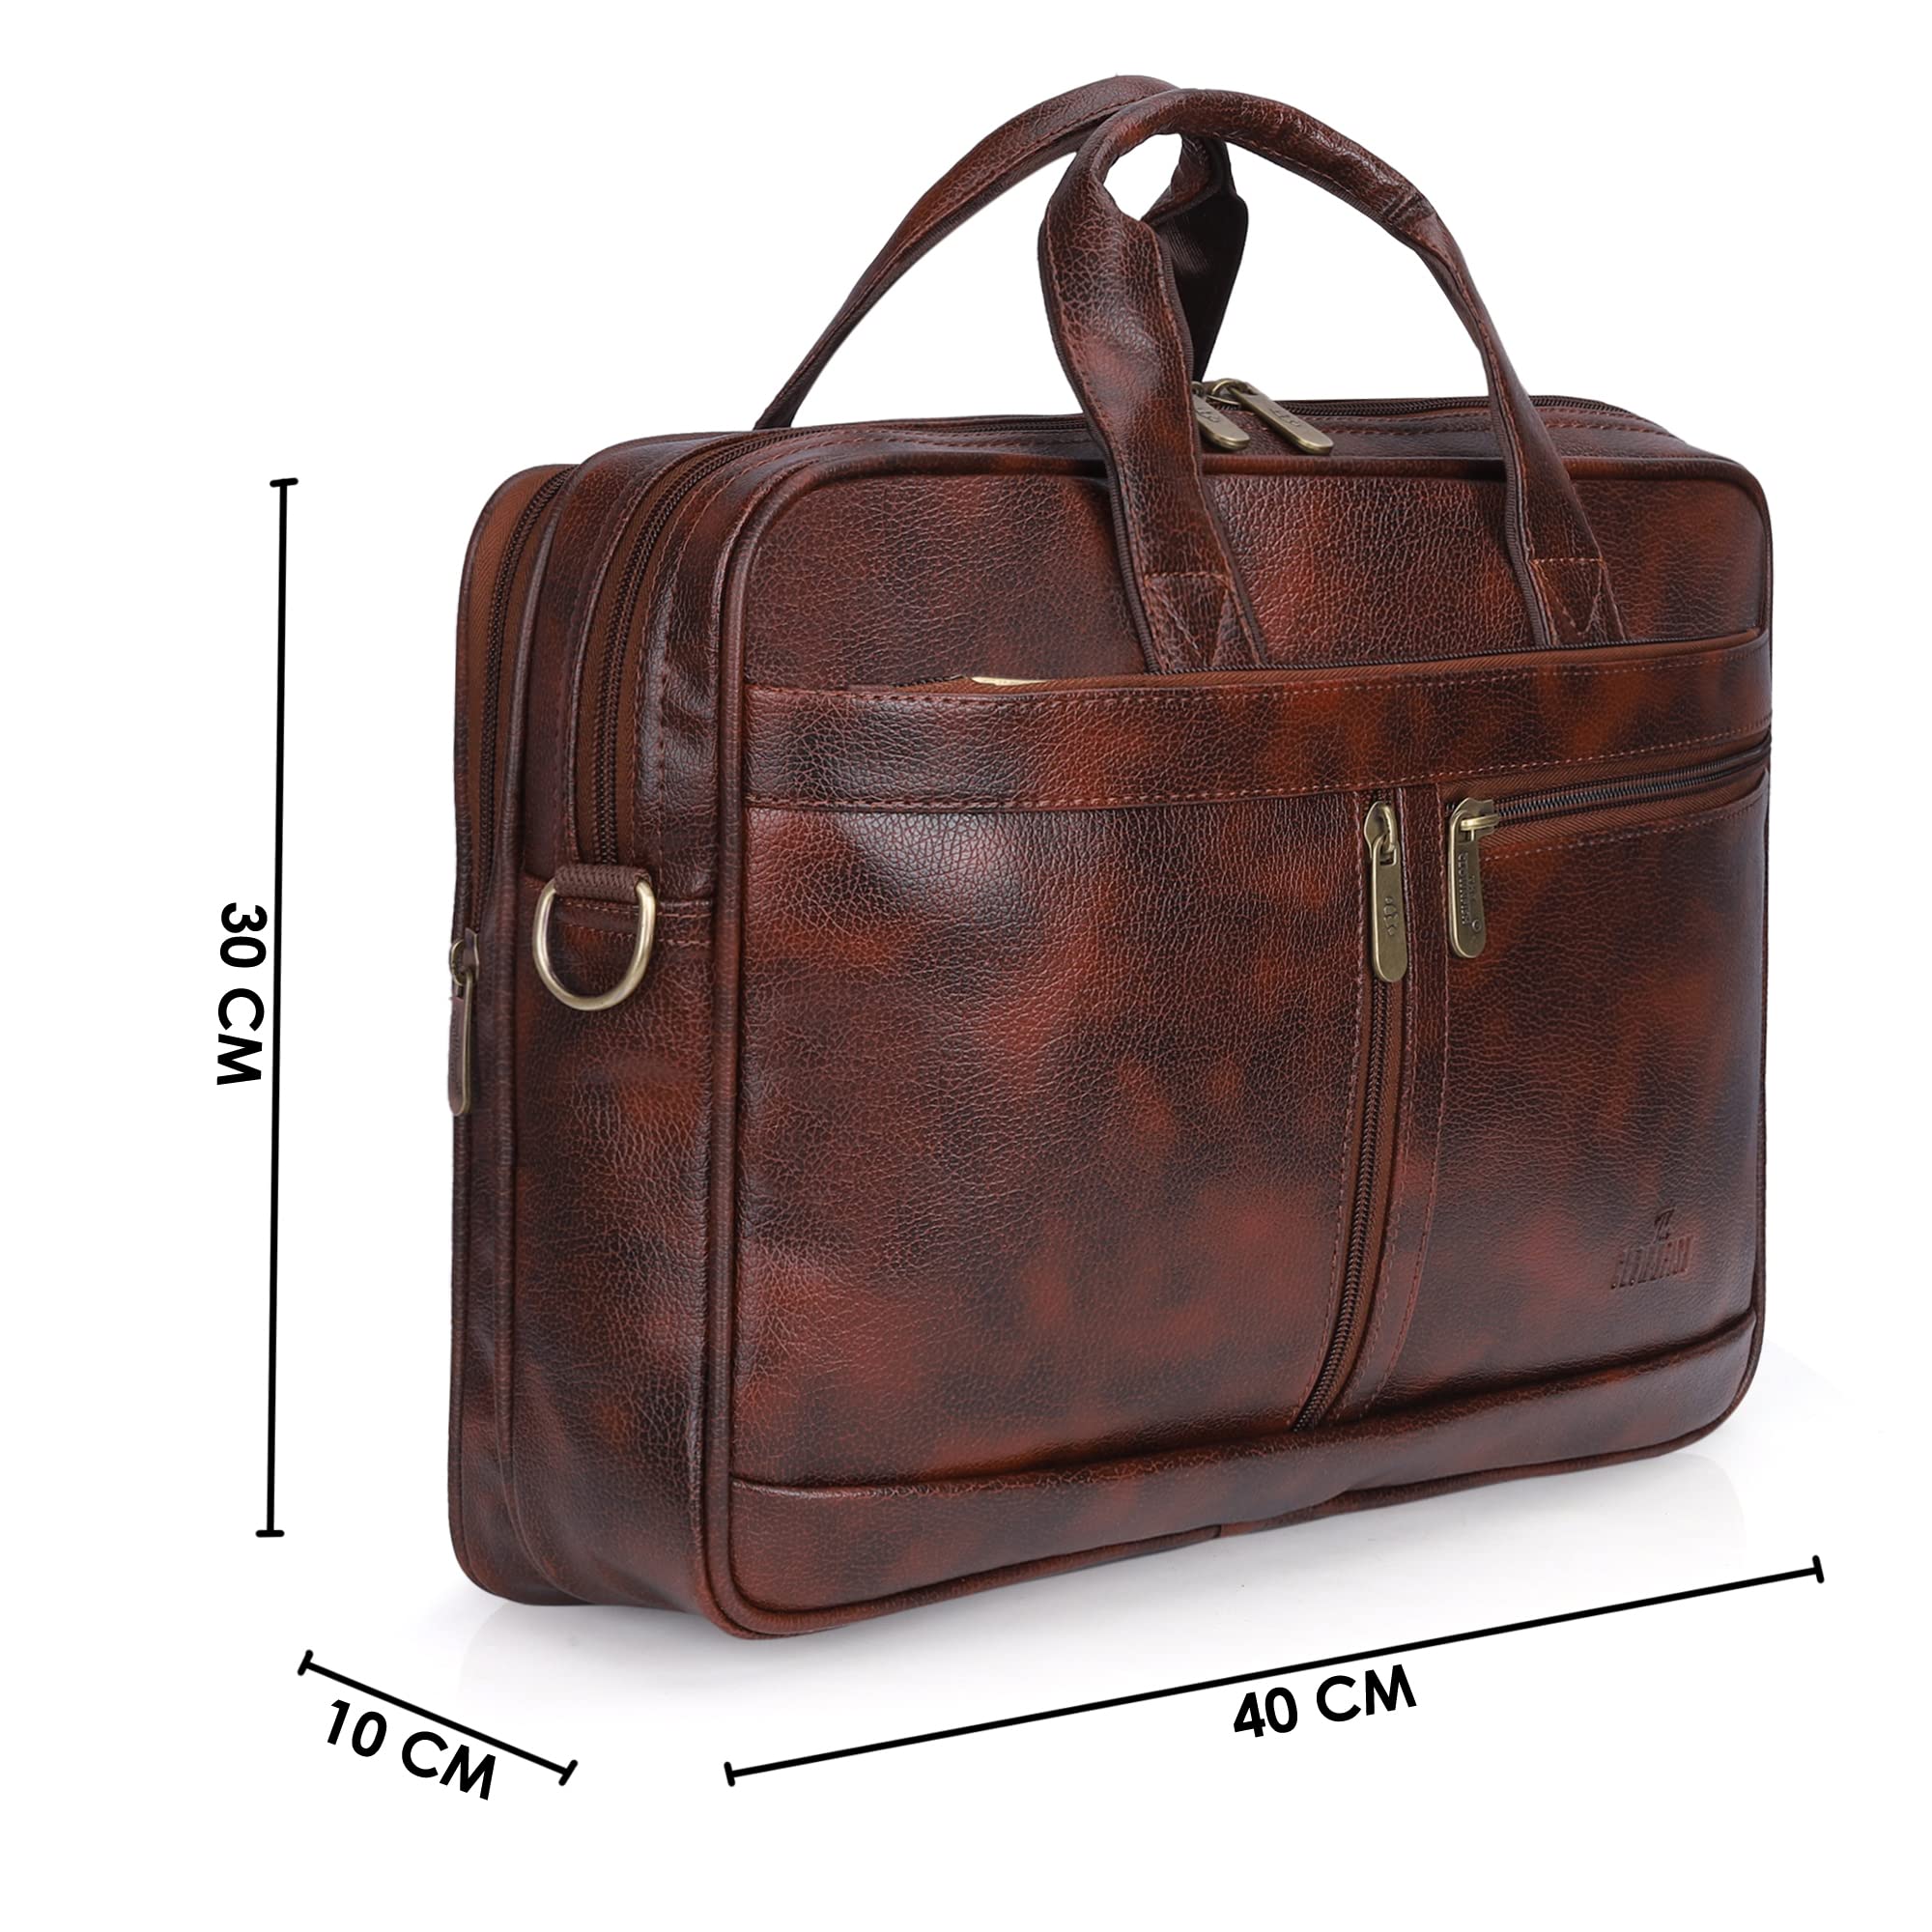 The Clownfish Faux Leather 15.6 inch Laptop Messenger Bag Briefcase Laptop Bag (Tan)